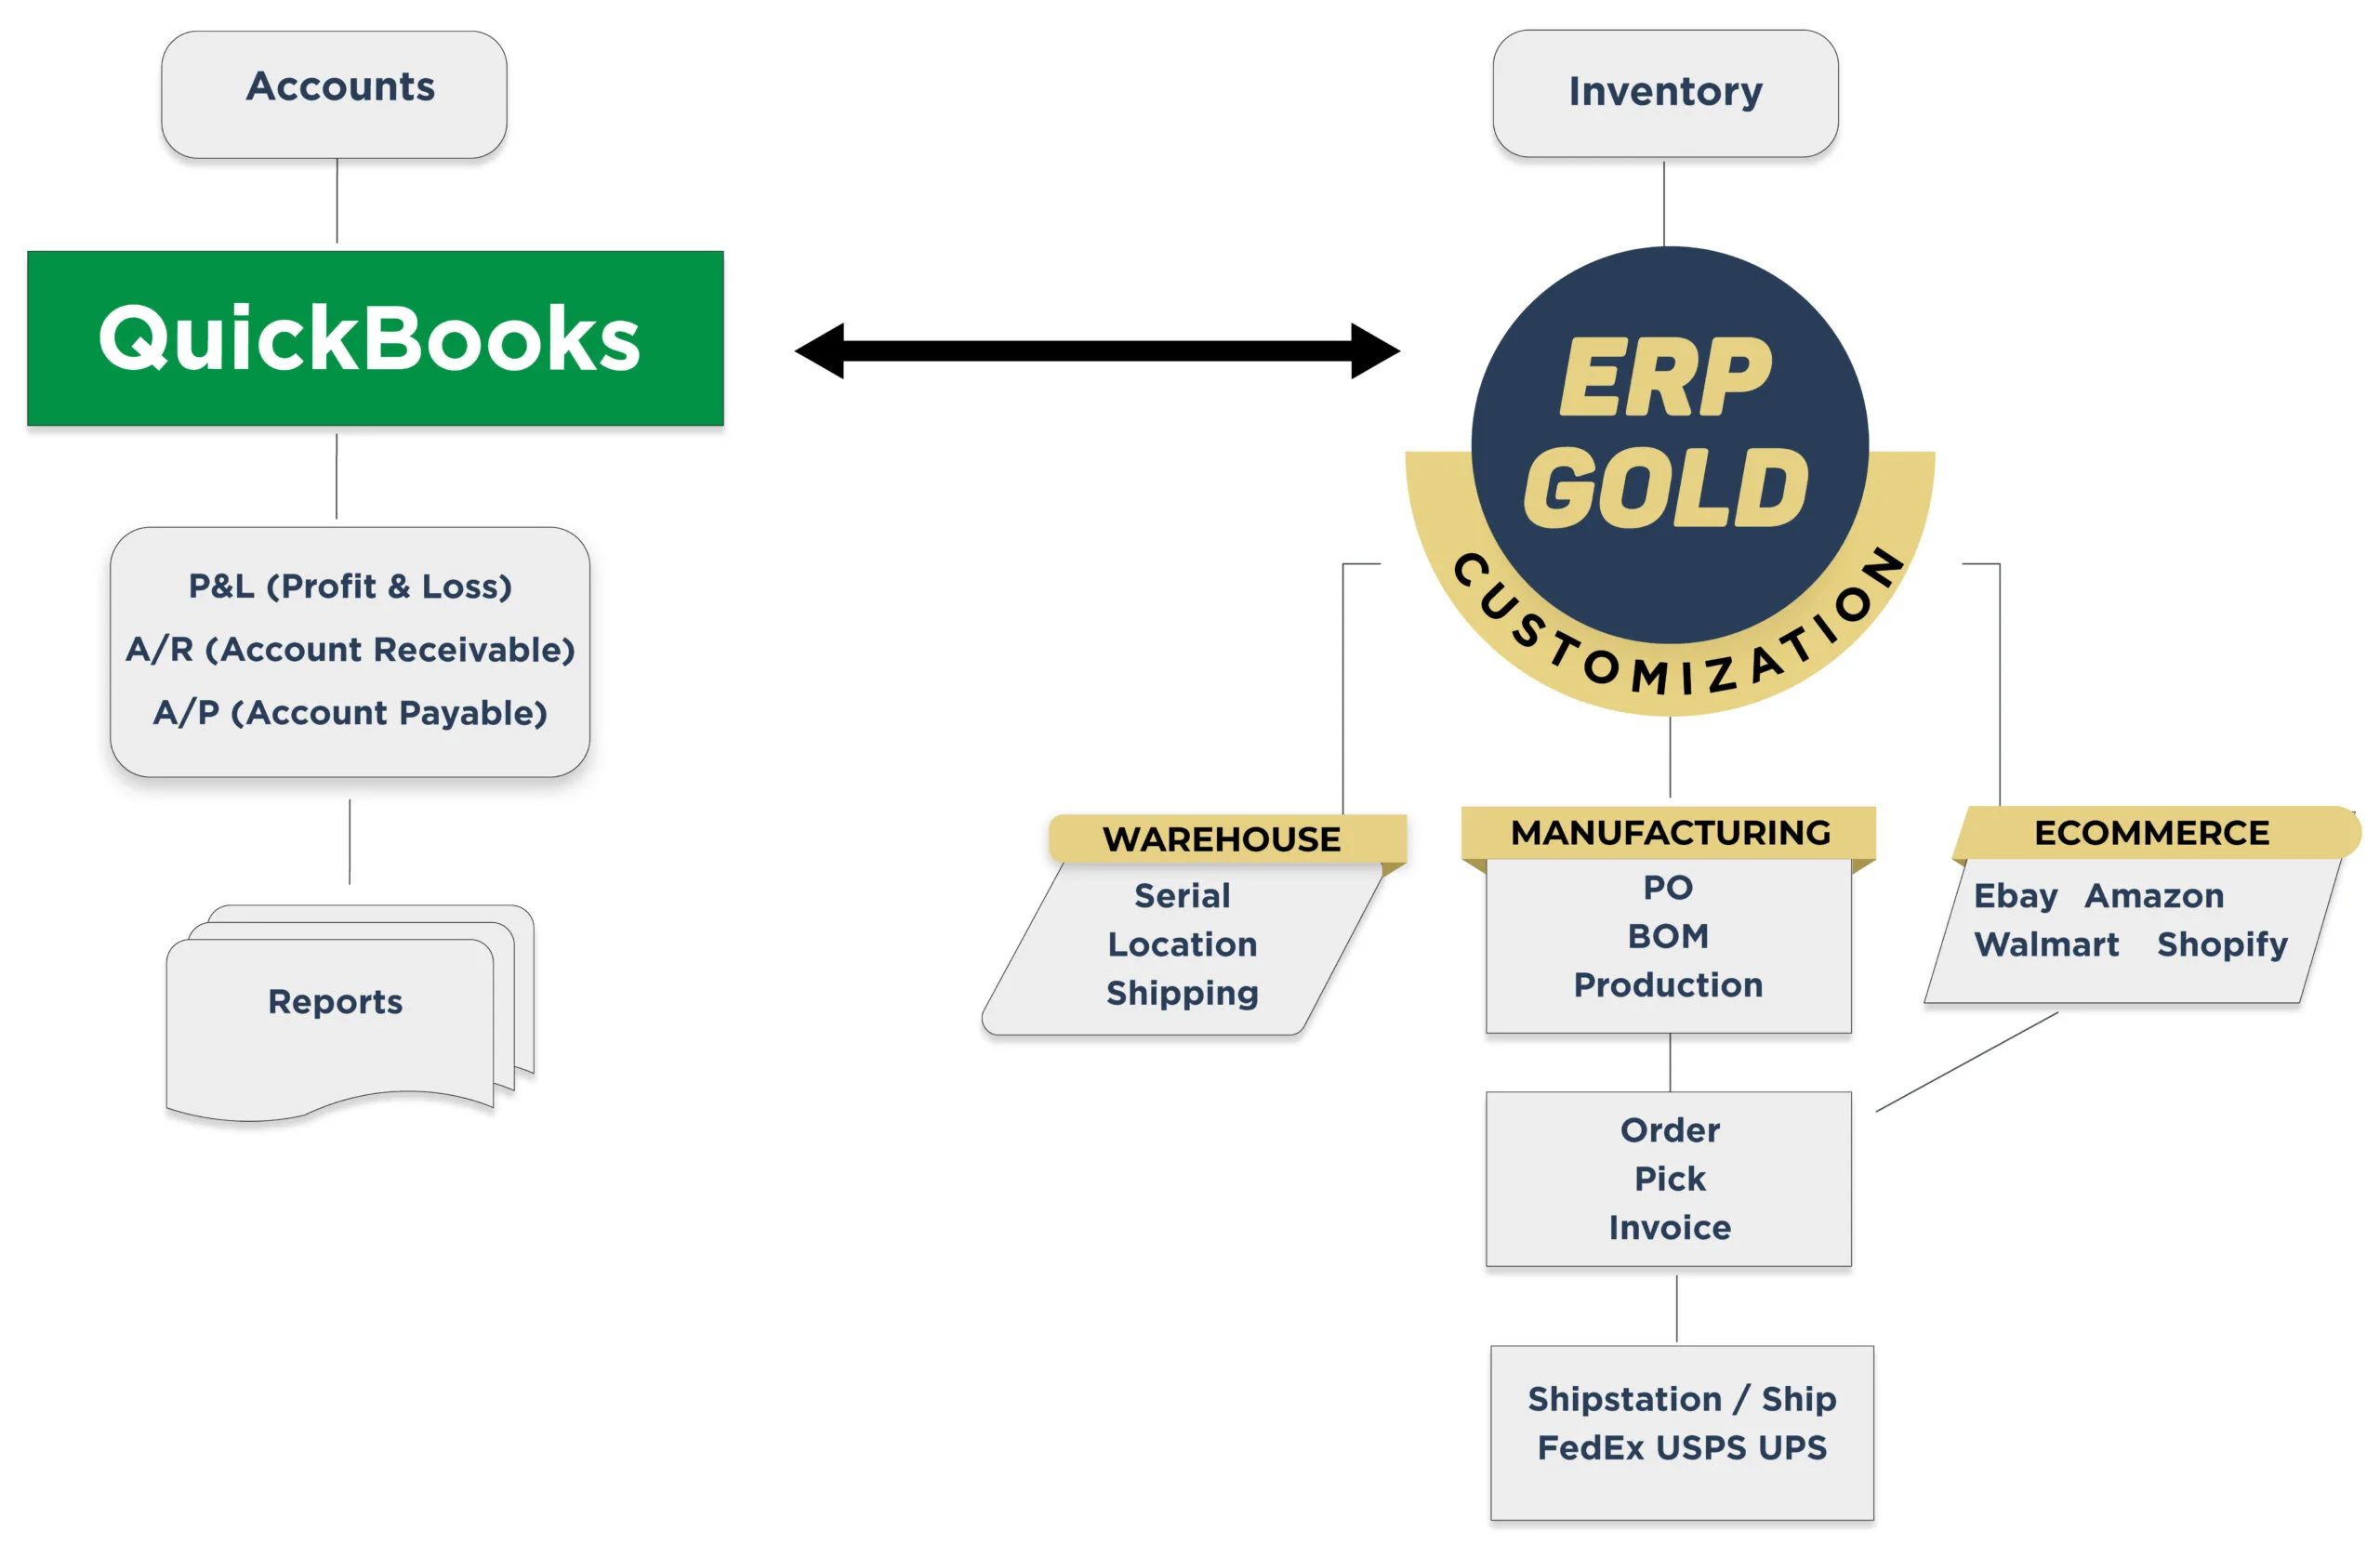 ERP Gold | Home